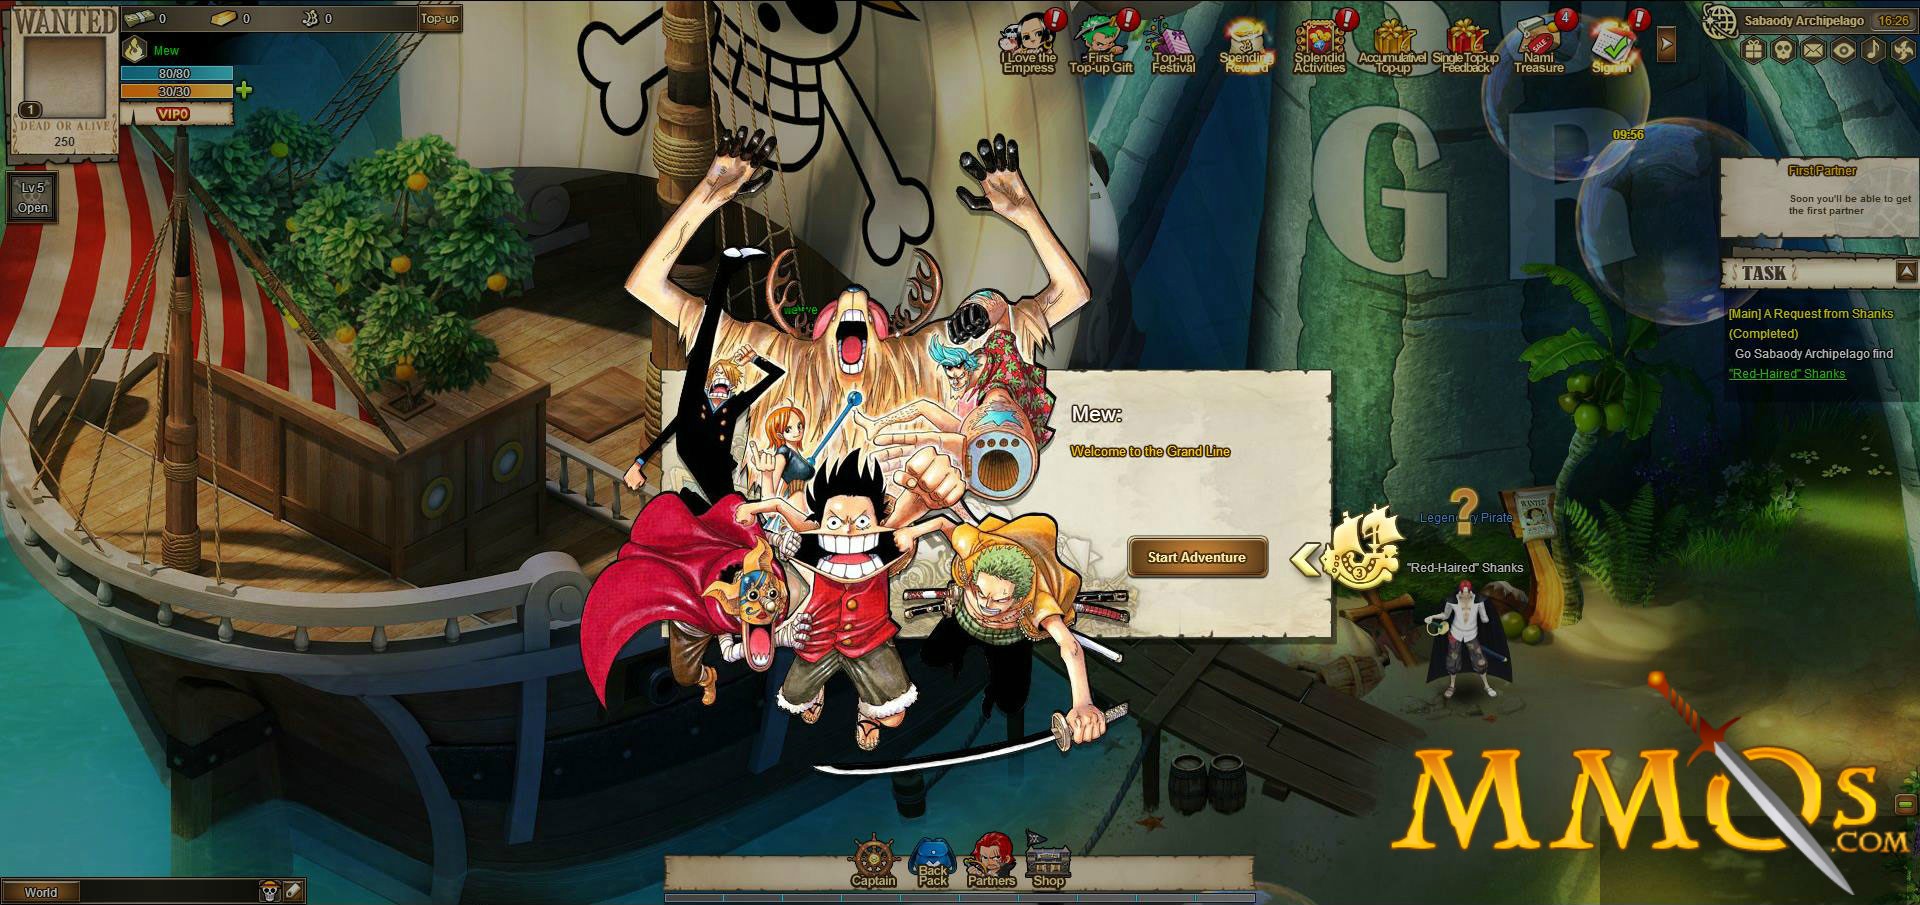 One Piece Online - Top Web Games